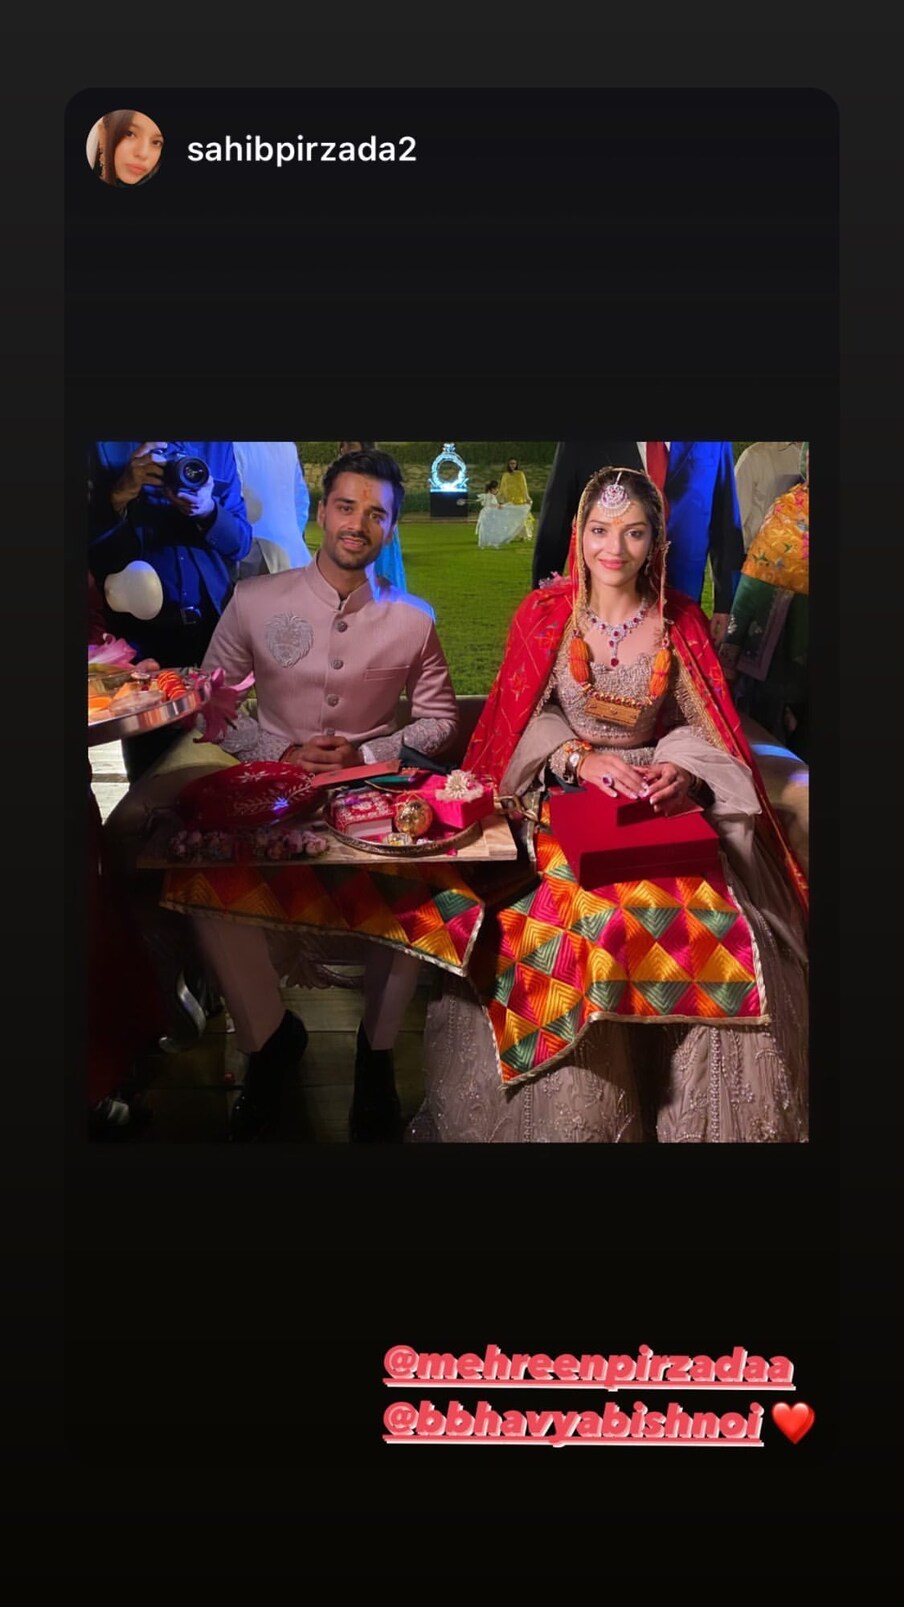  Mehreen Pirzada Engagement : కాంగ్రెస్ యువ నేత భవ్య బిష్ణోయ్‌తో ఘనంగా మెహ్రీన్ నిశ్చితార్థం.. పిక్స్ Photo : Instagram